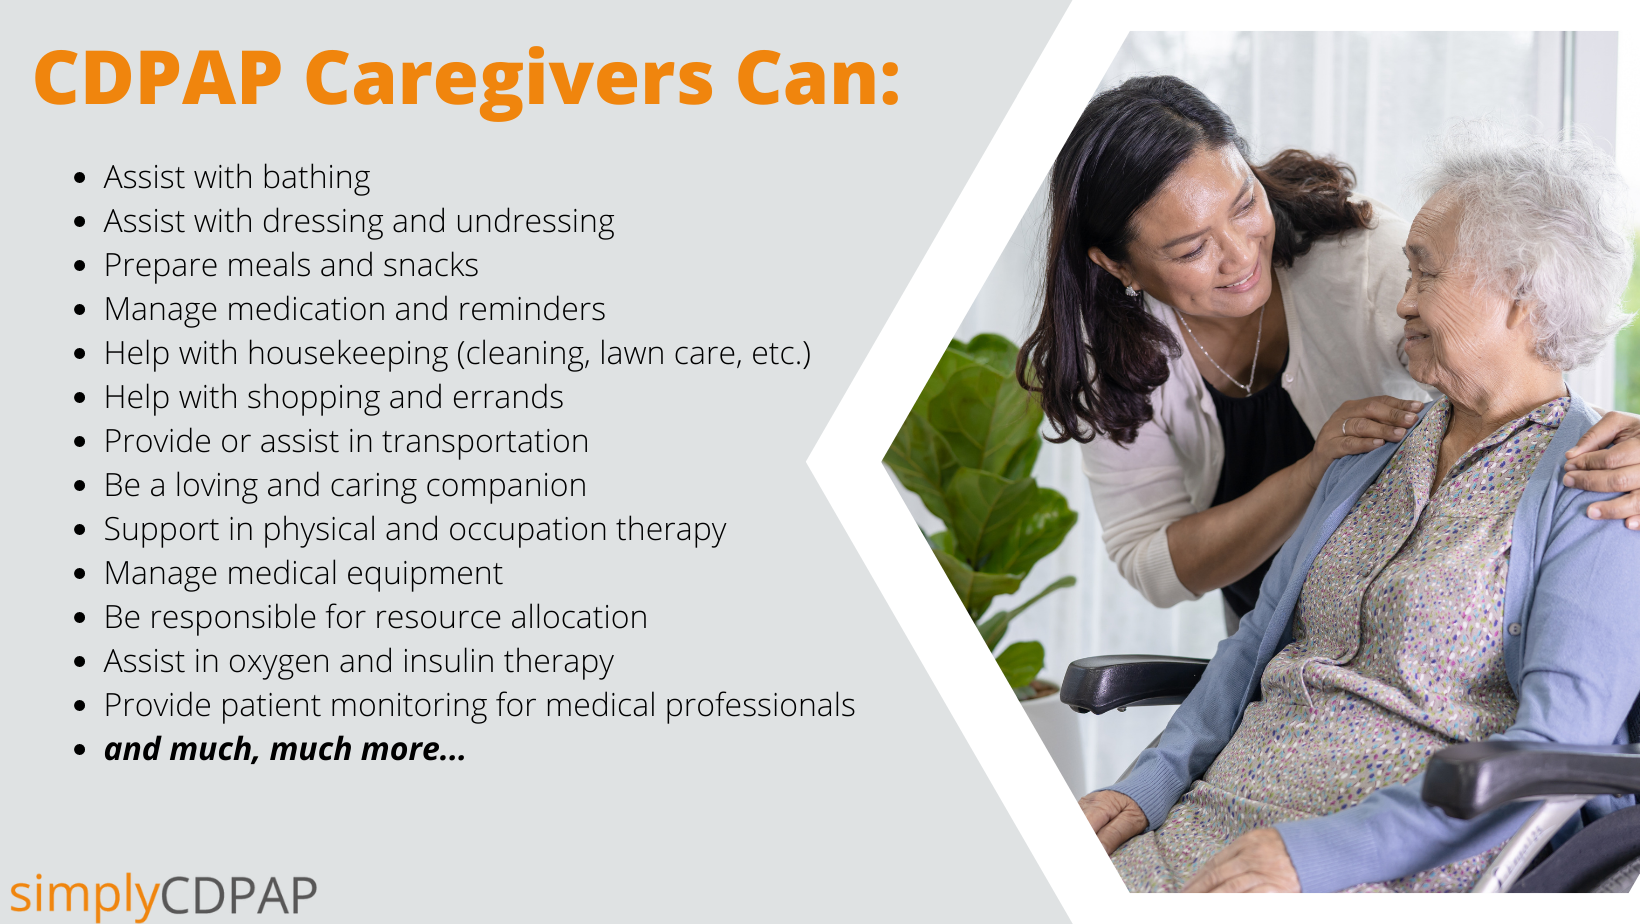 CDPAP caregiver list